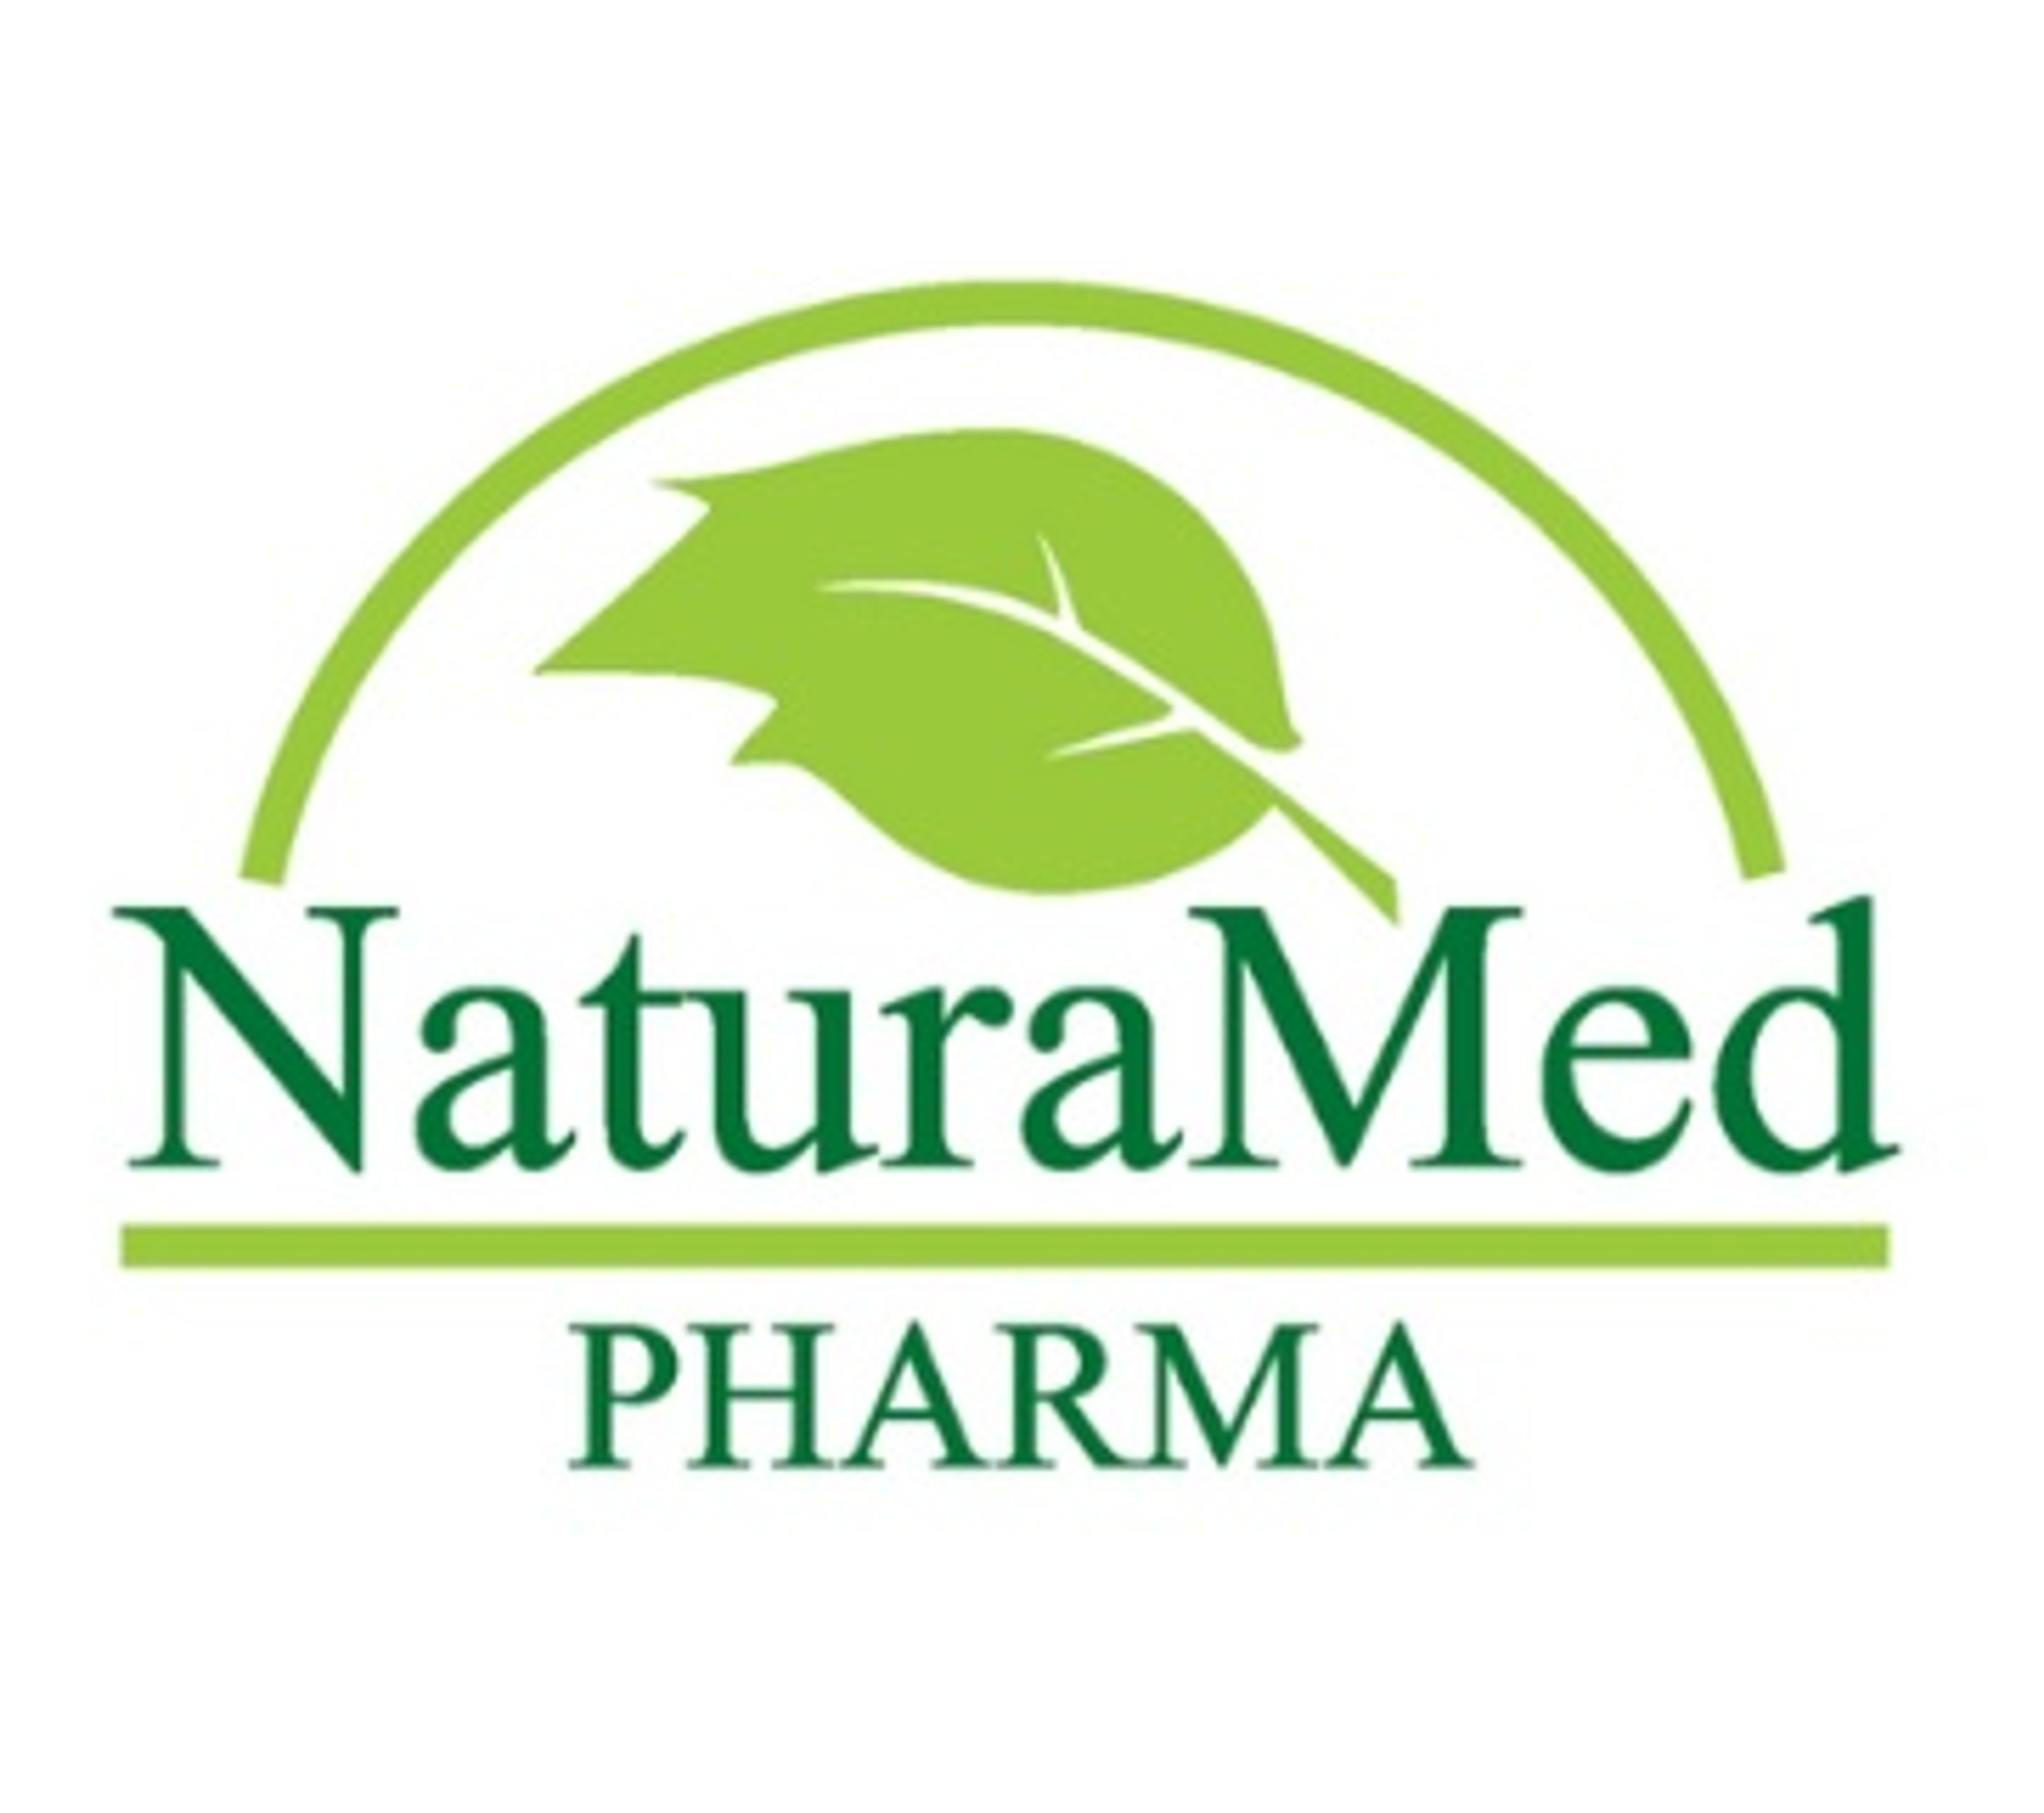 naturamed pharma logo.png